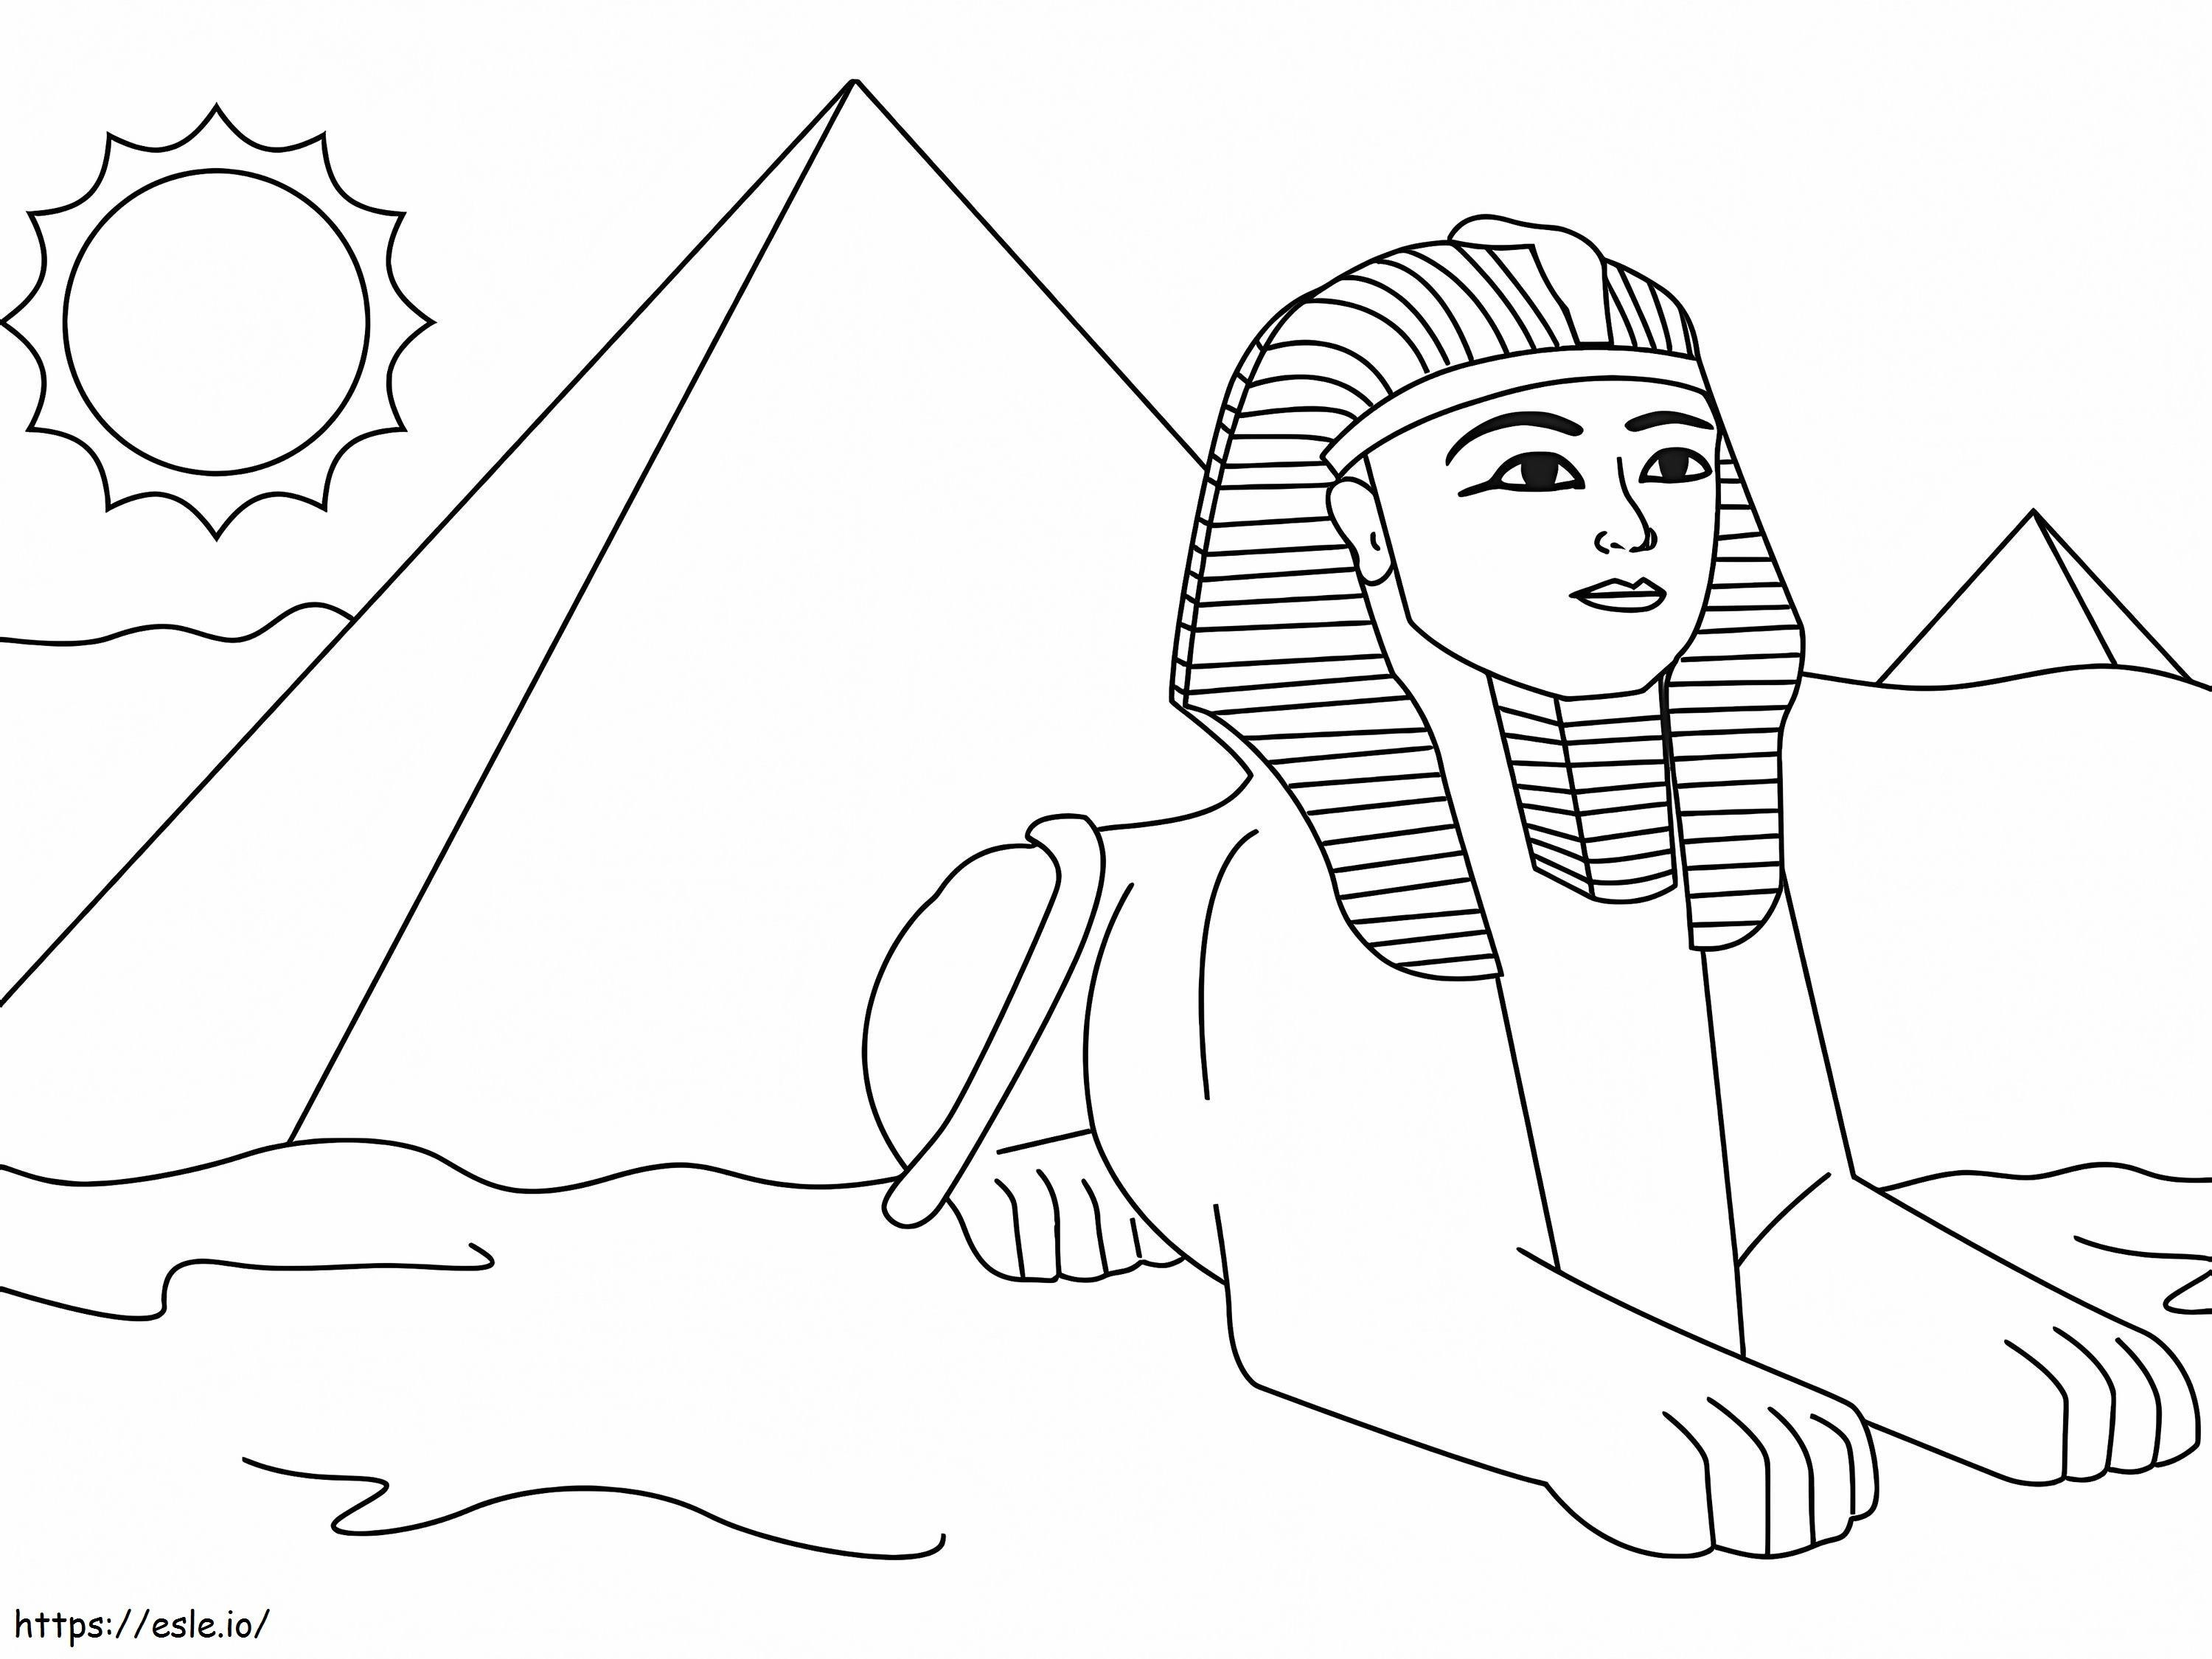 Esfinge e pirâmide para colorir